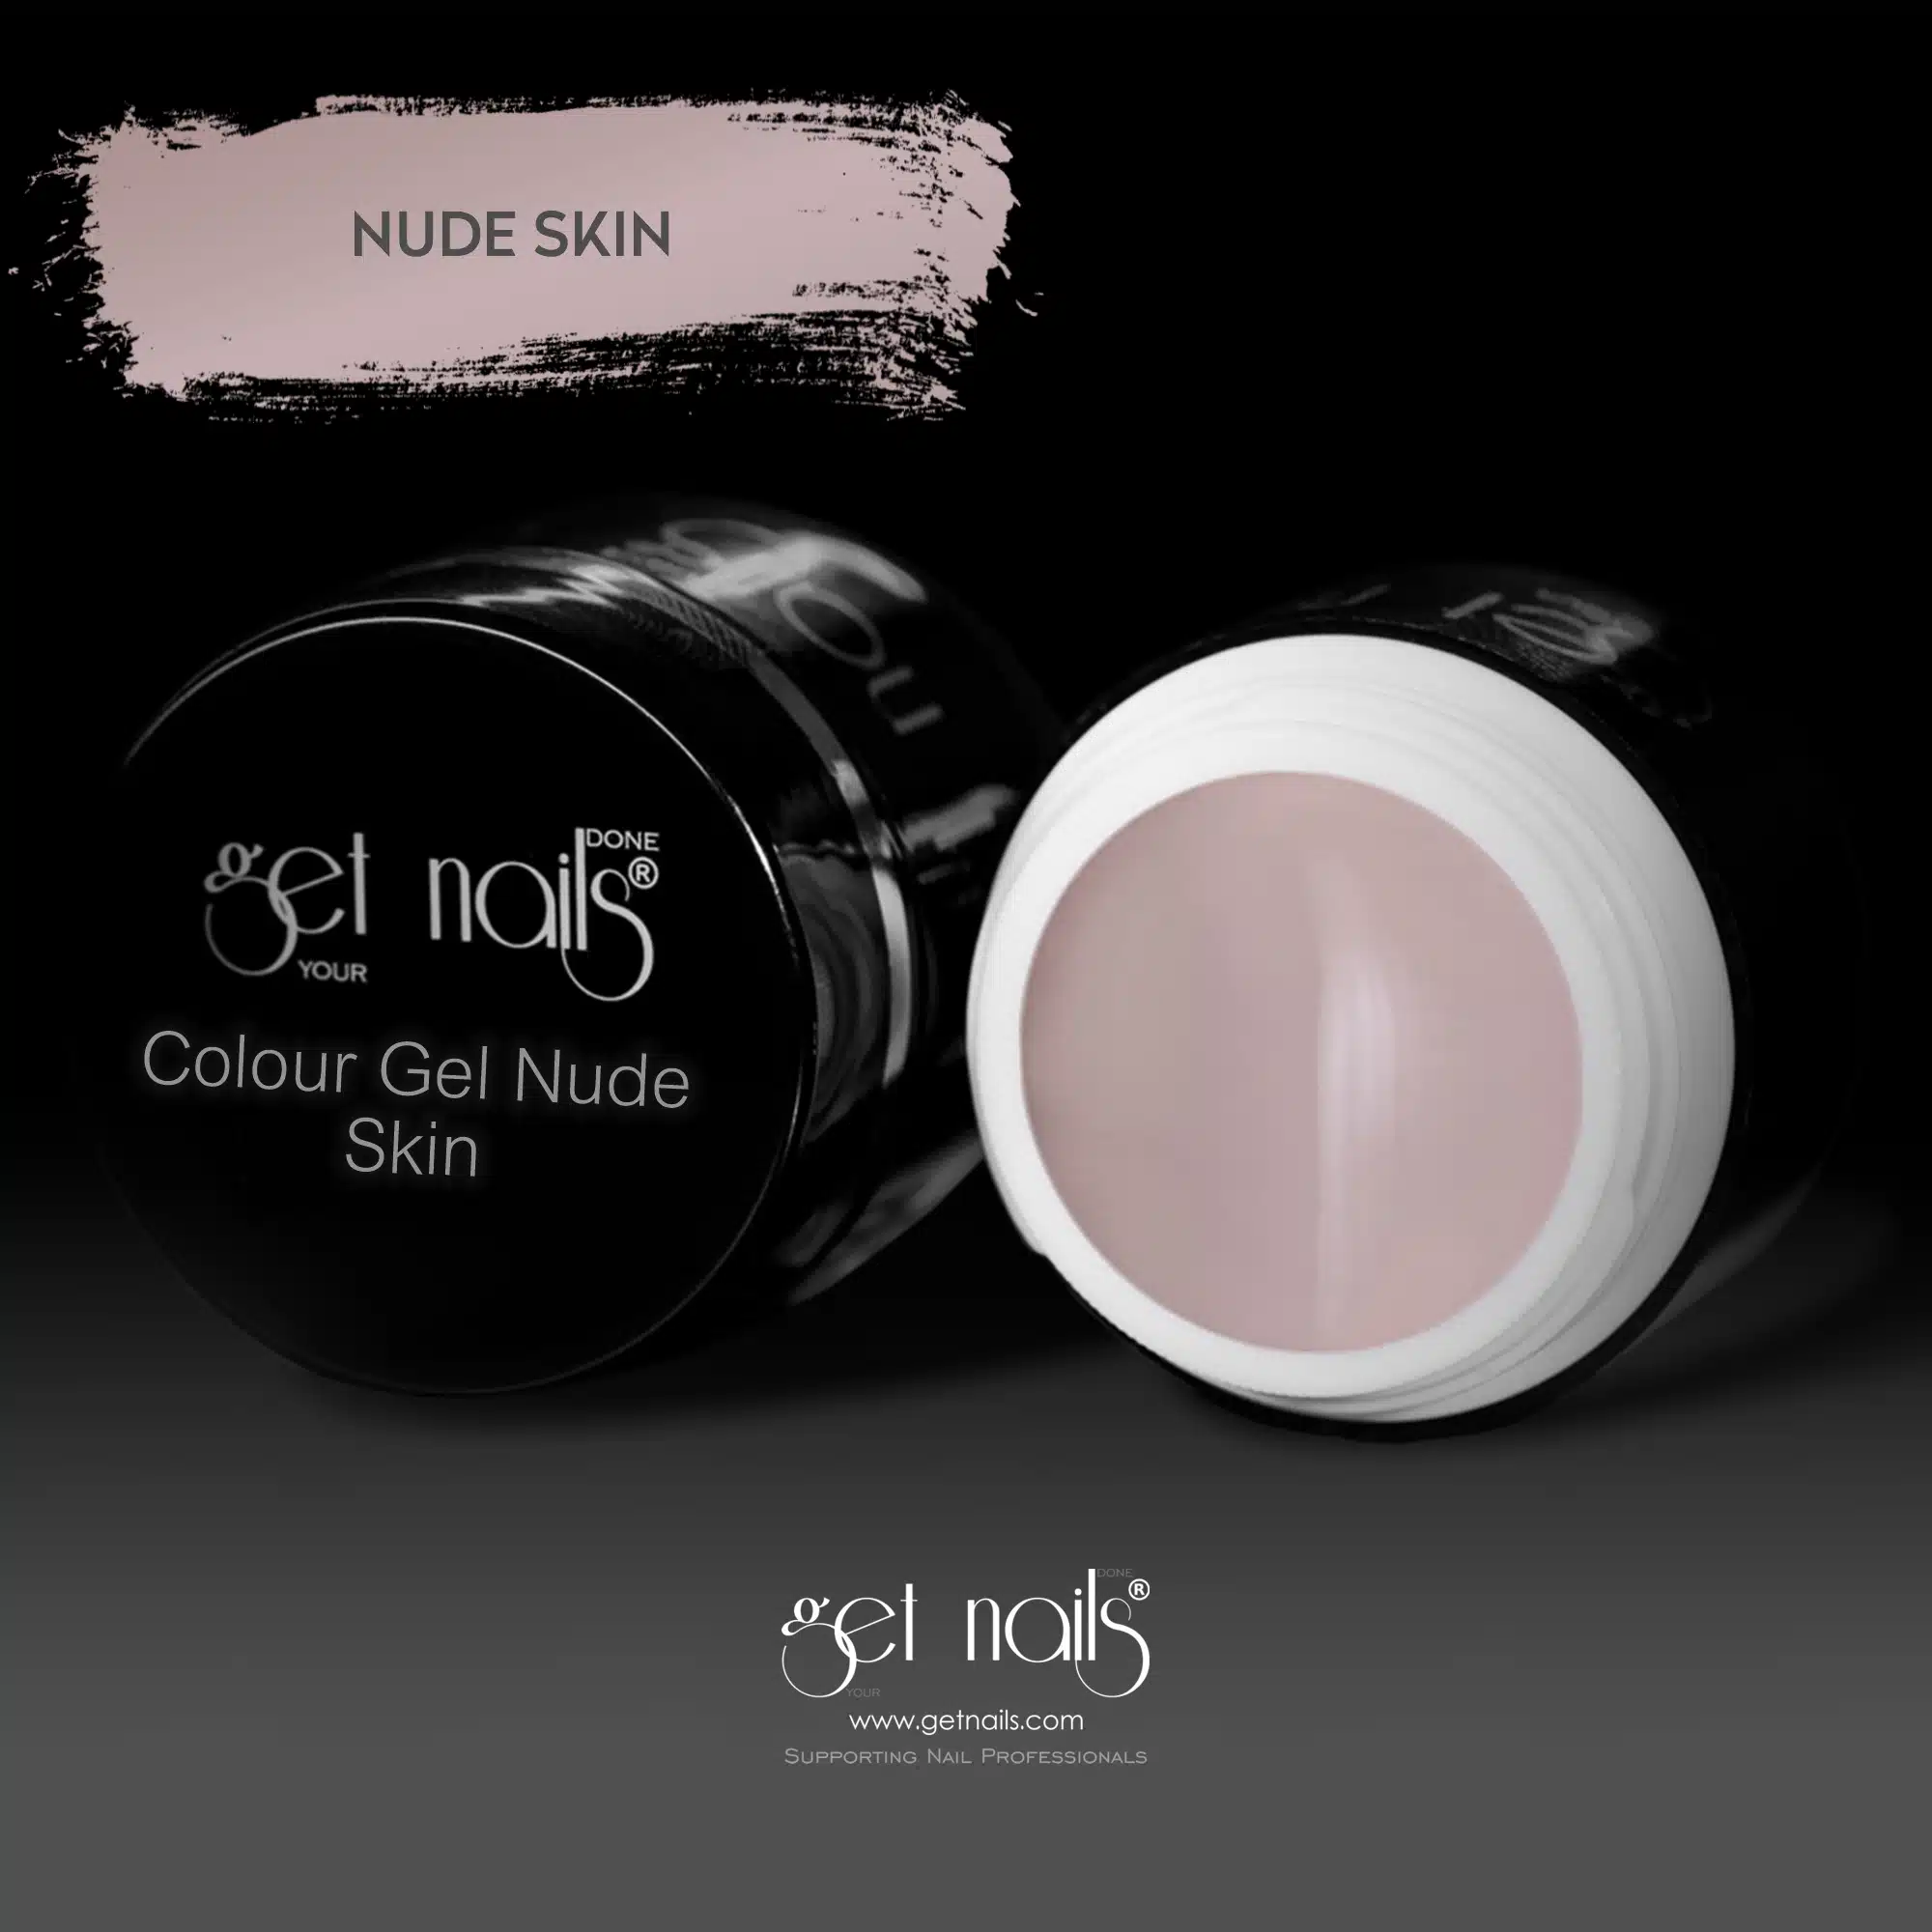 Get Nails Austria - Gel colorato Nude Skin 5g